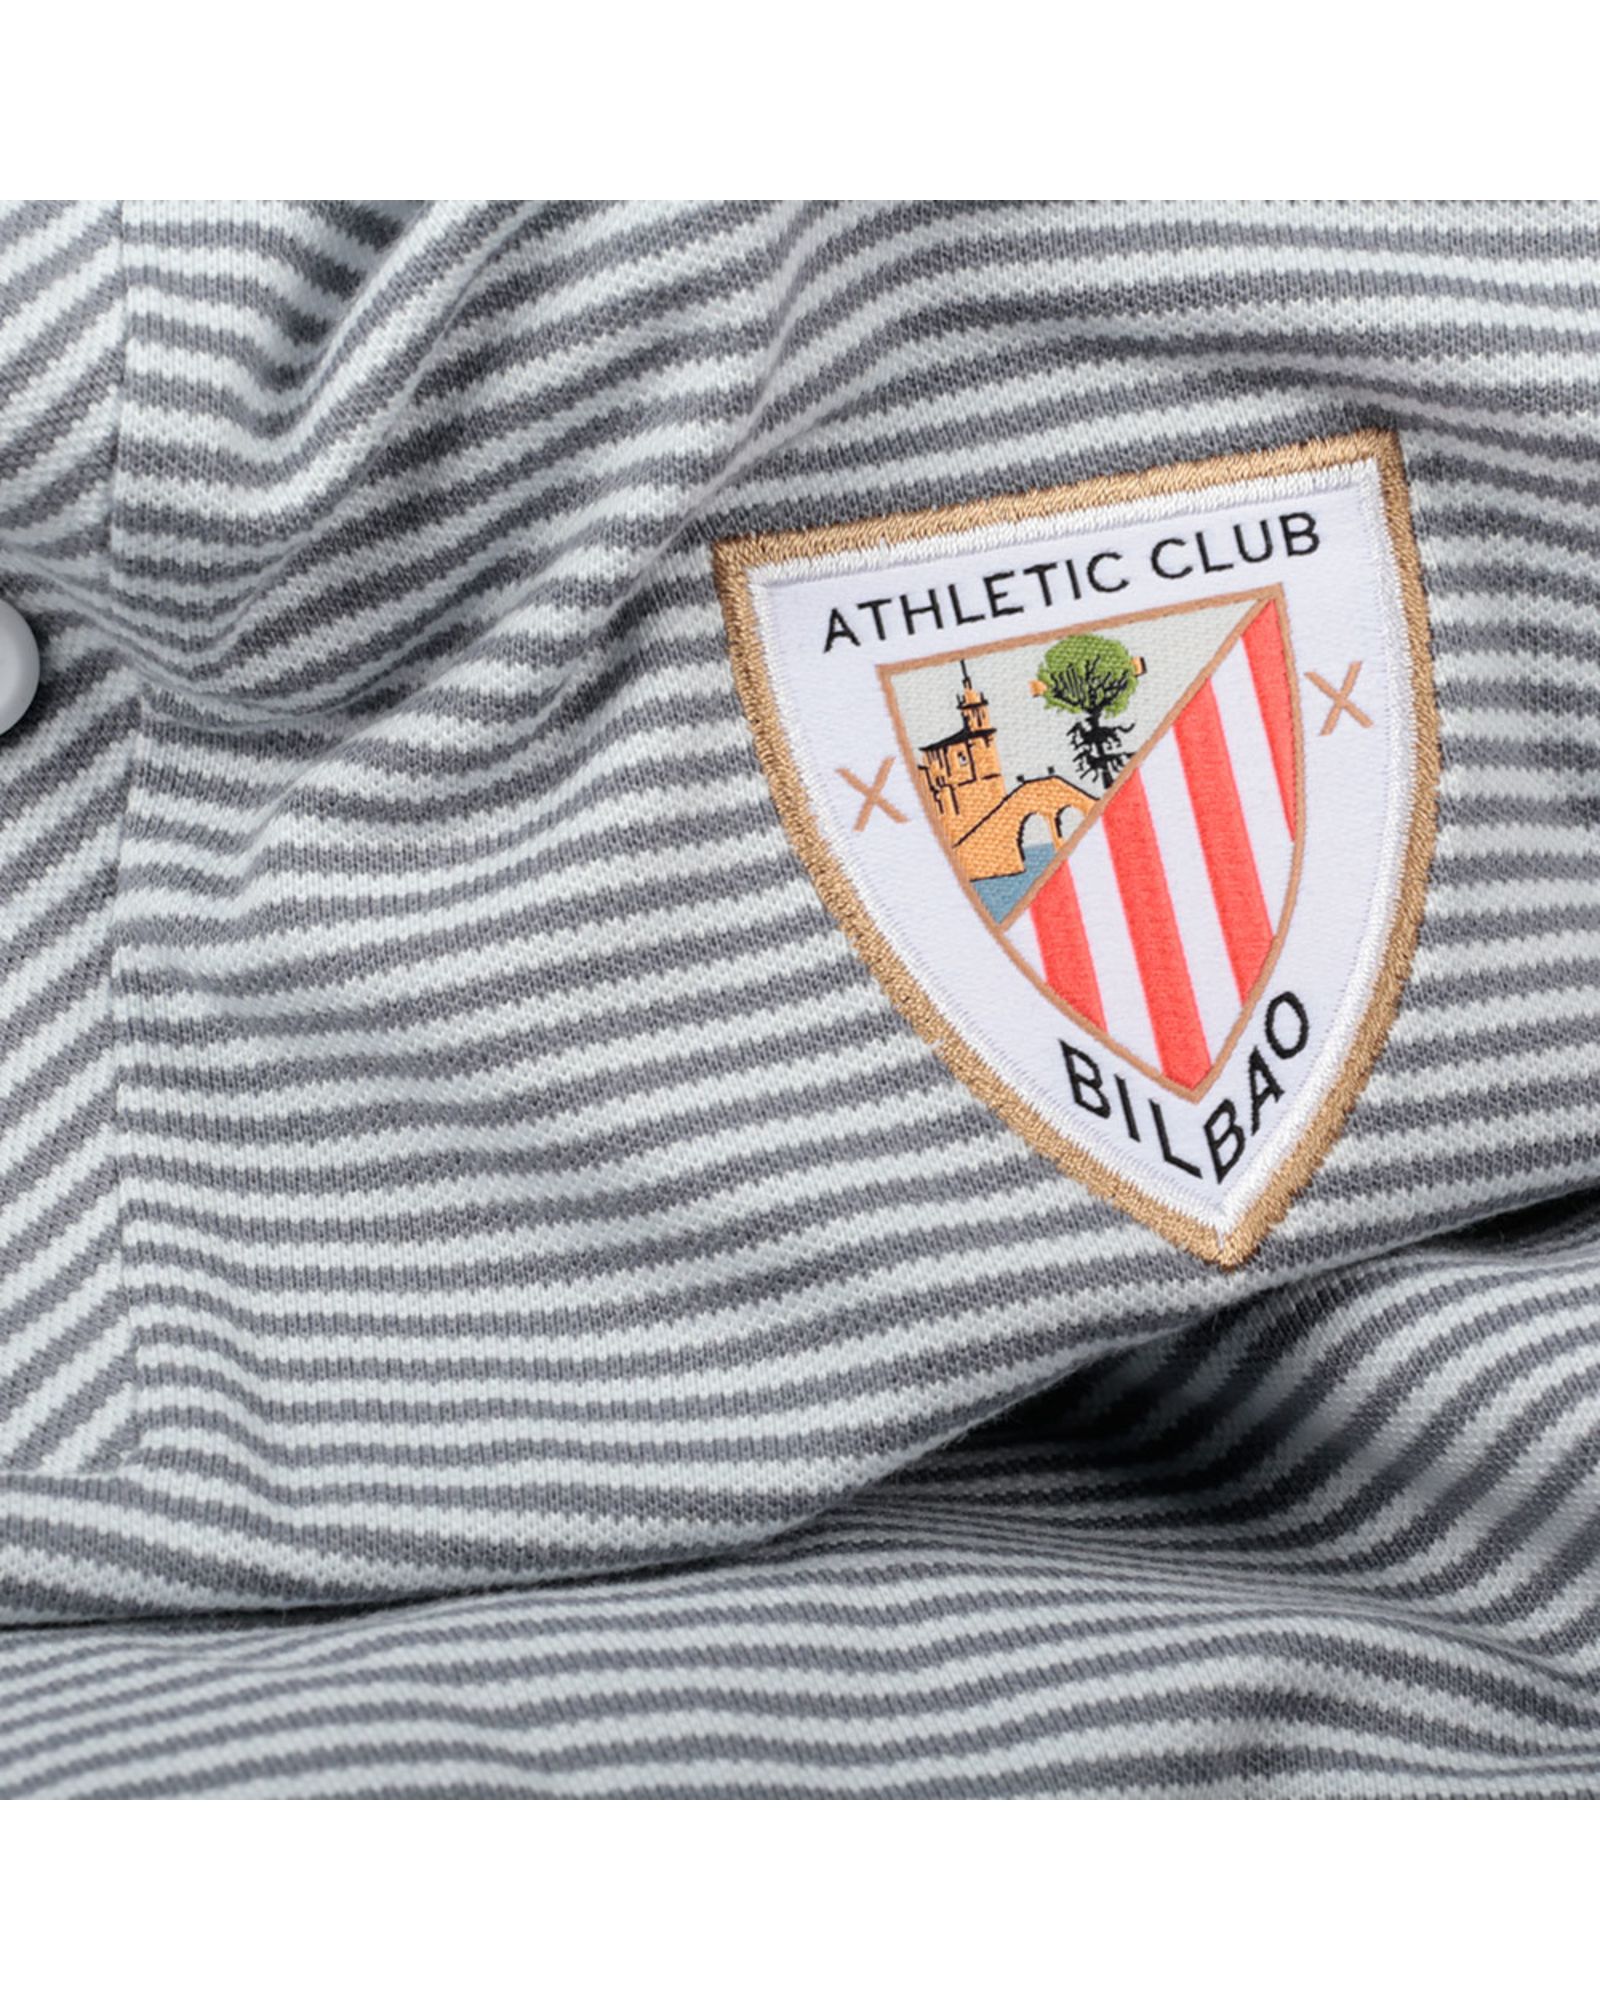 Polo Athletic Club Bilbao 2016/2017 Gris - Fútbol Factory